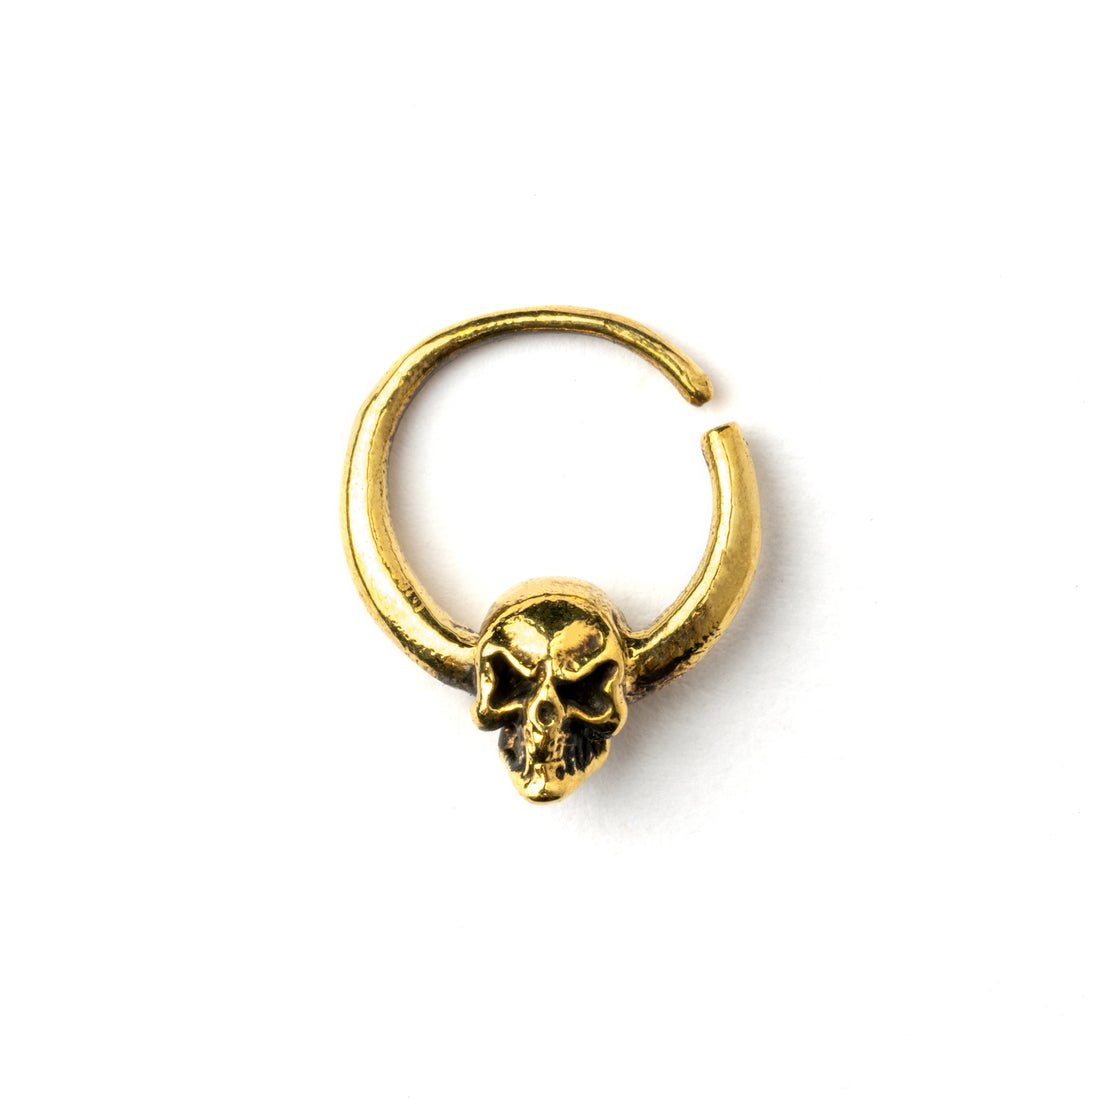 Pirate golden brass skull septum ring frontal view